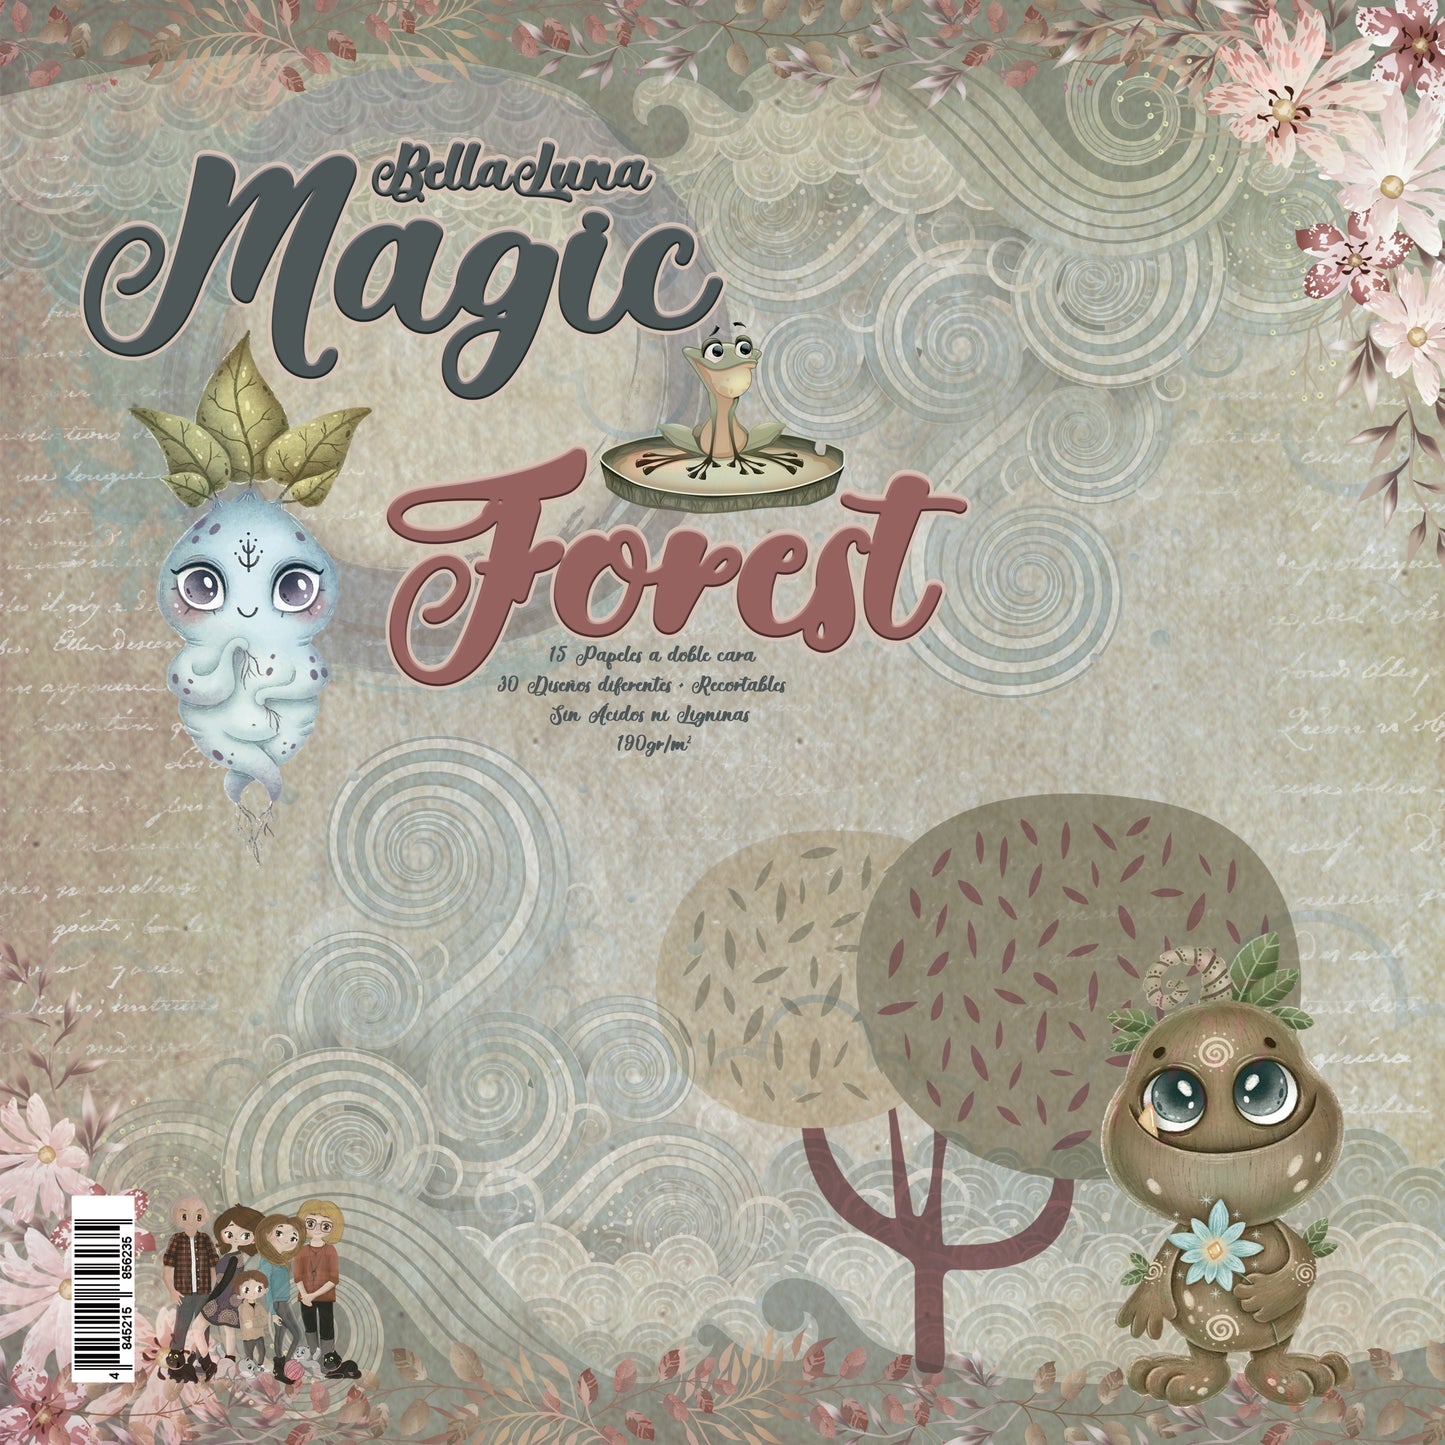 Pad 12x12" Bellaluna Crafts con 15 papeles doble cara Magic Forest